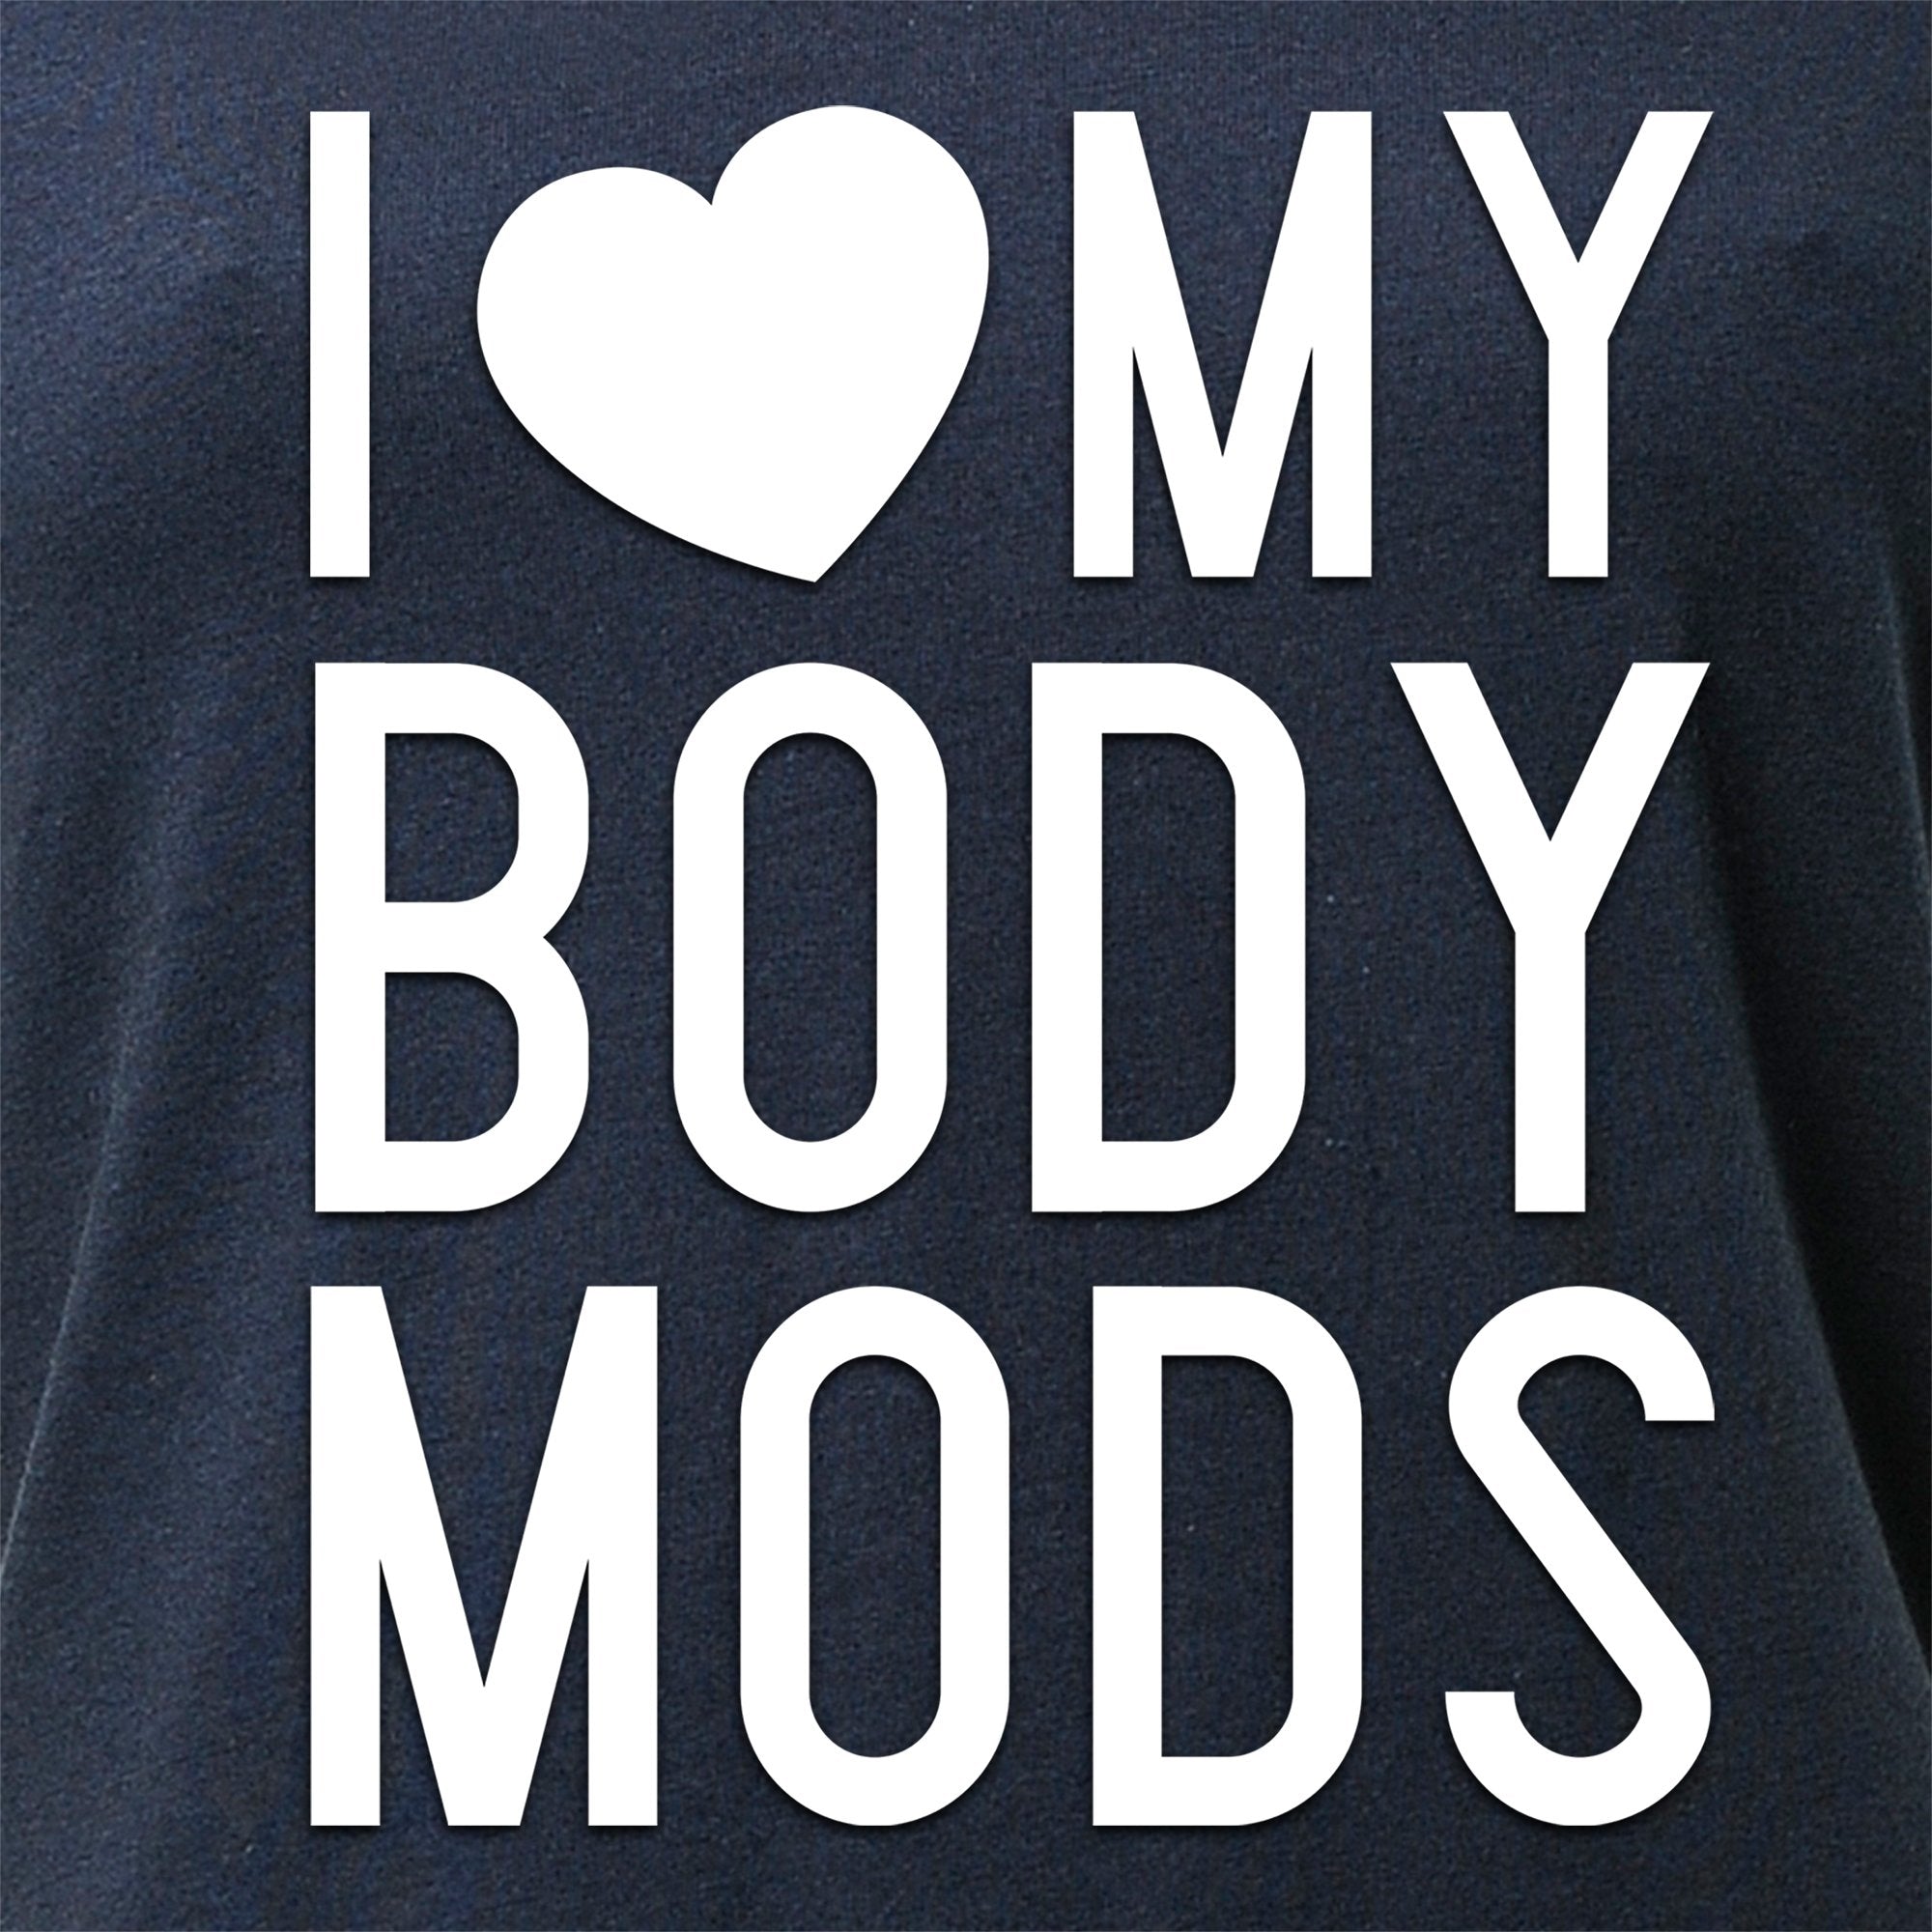 I Love My Body Mods Tapered V-Neck Tee Shirt